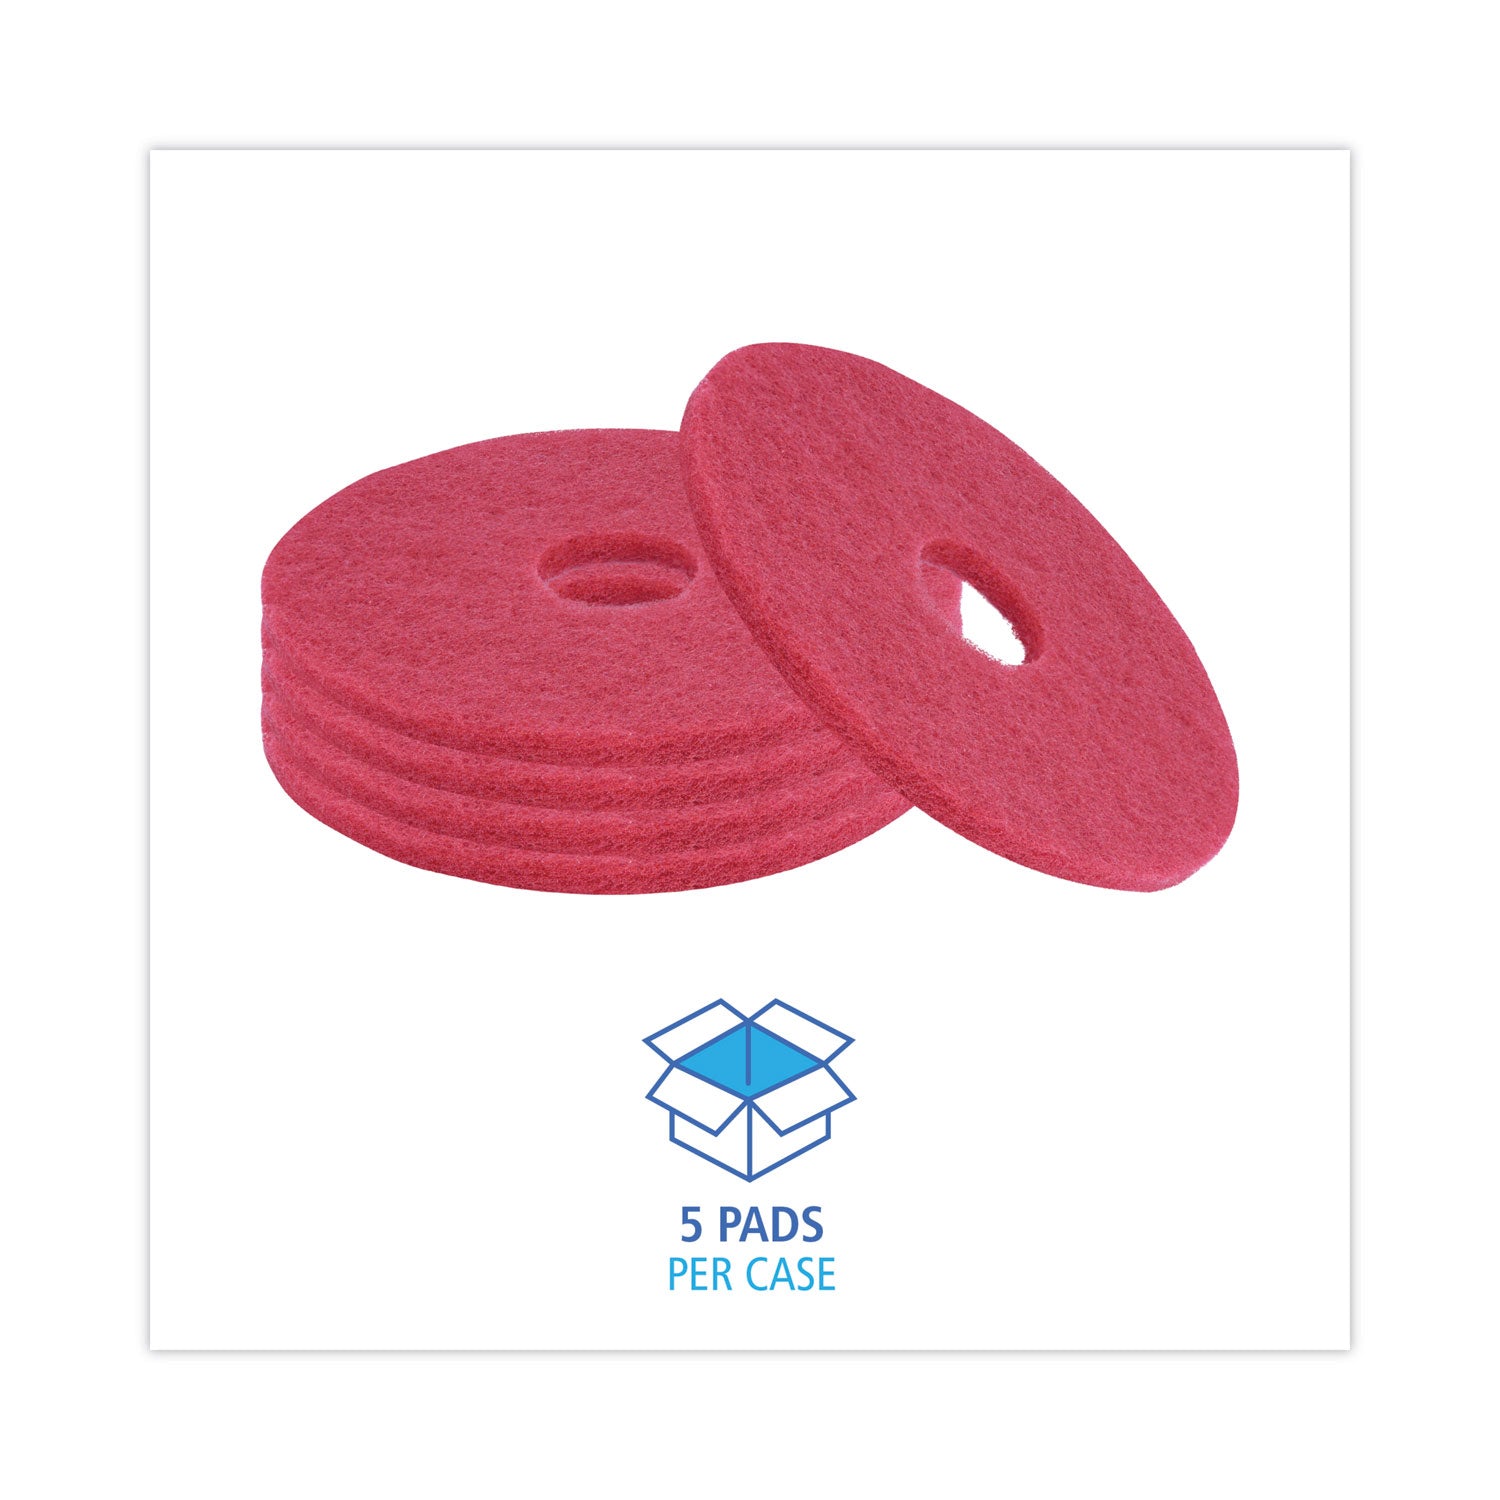 Buffing Floor Pads, 14" Diameter, Red, 5/Carton - 